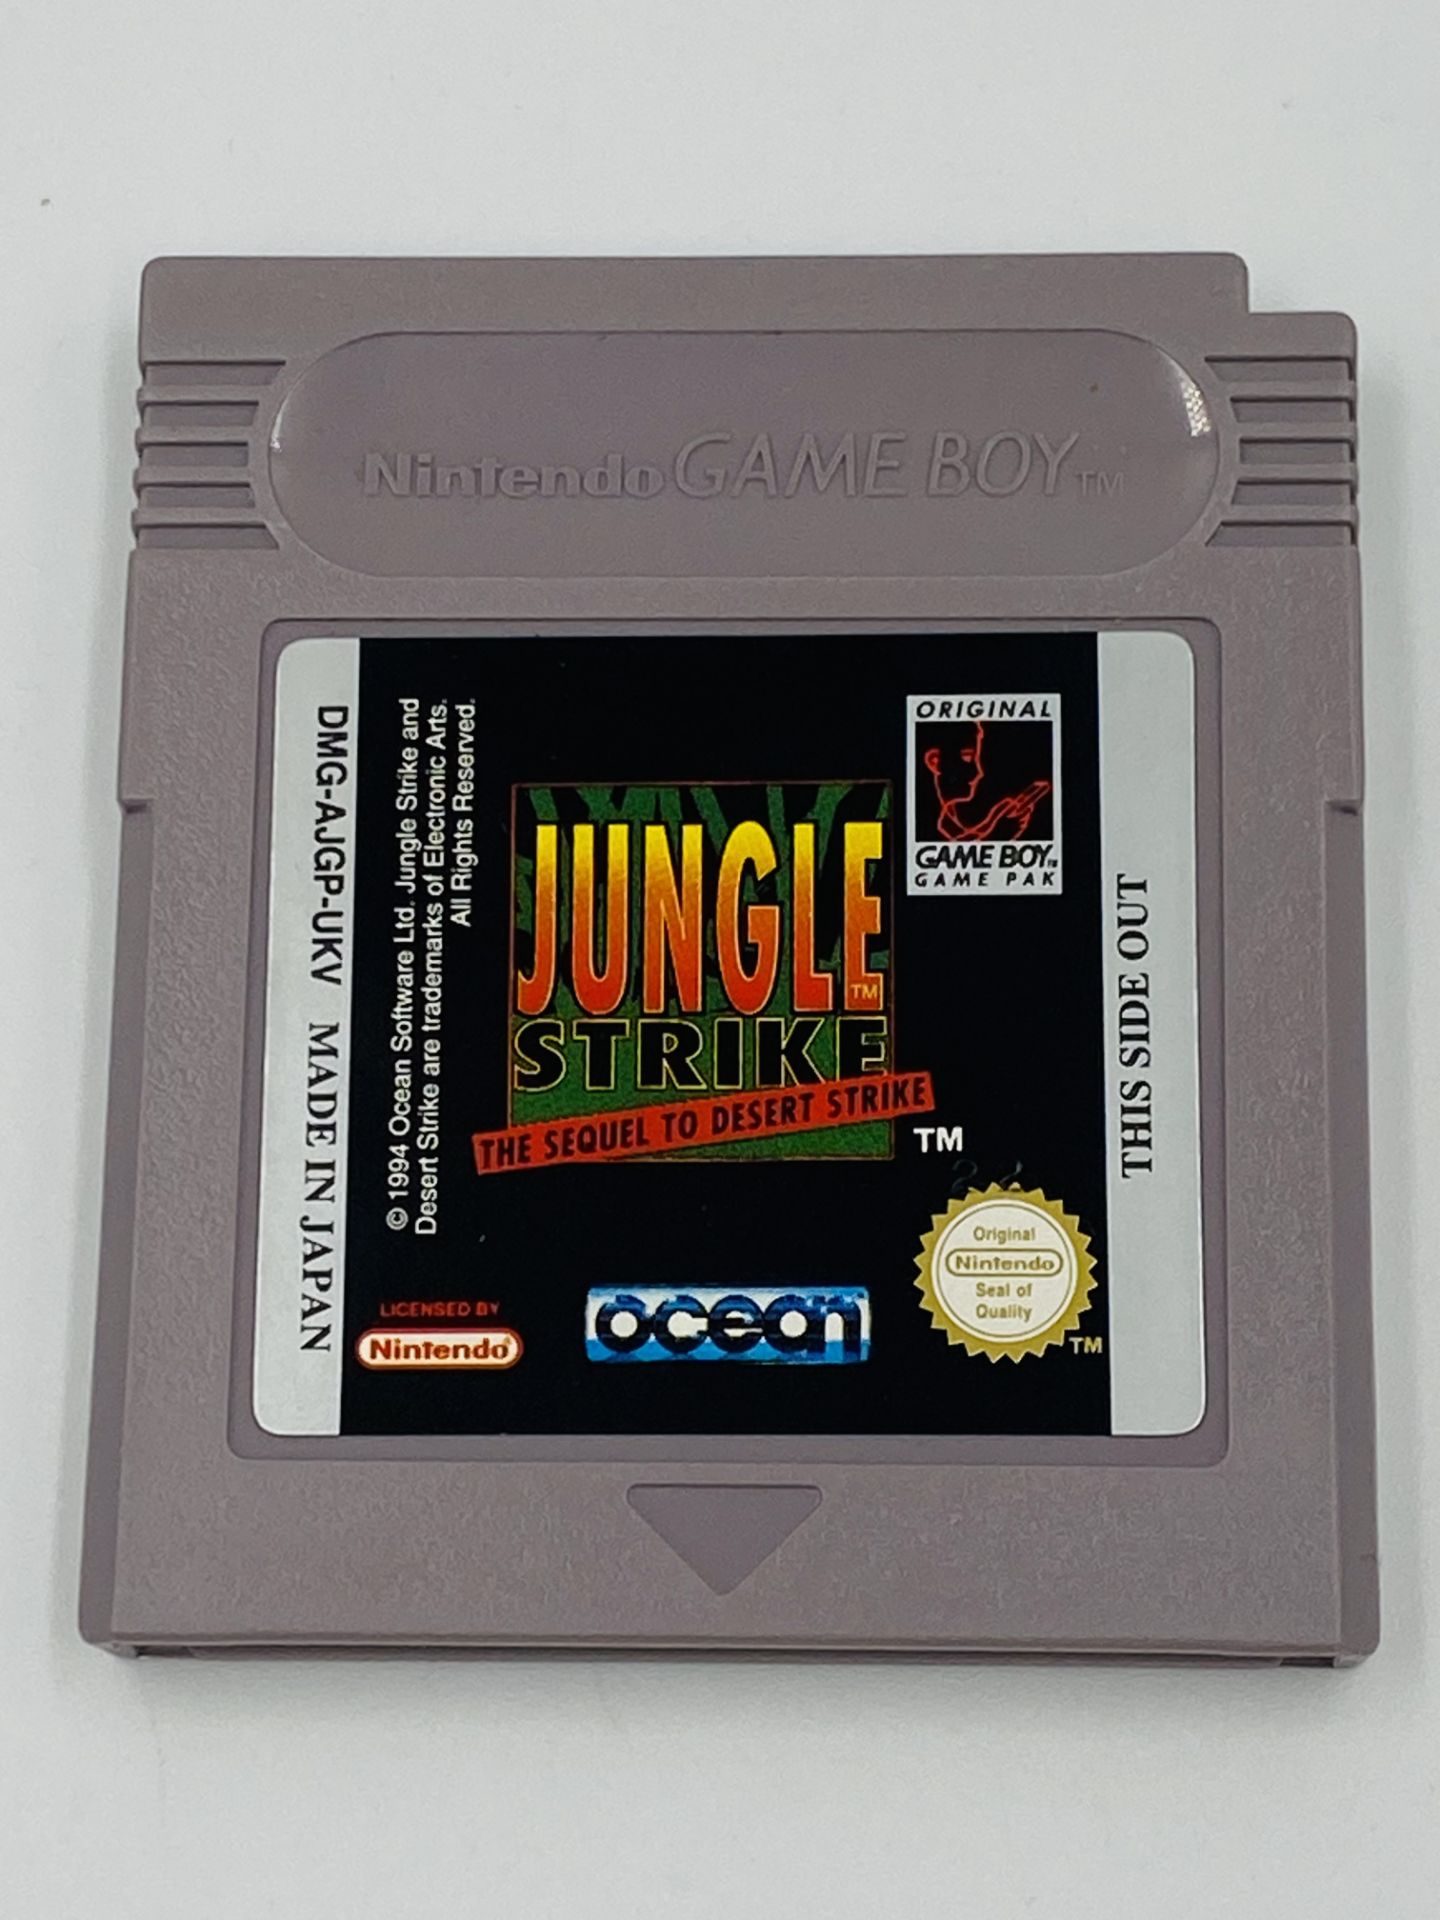 Nintendo Game Boy Jungle Strike, boxed - Image 4 of 4